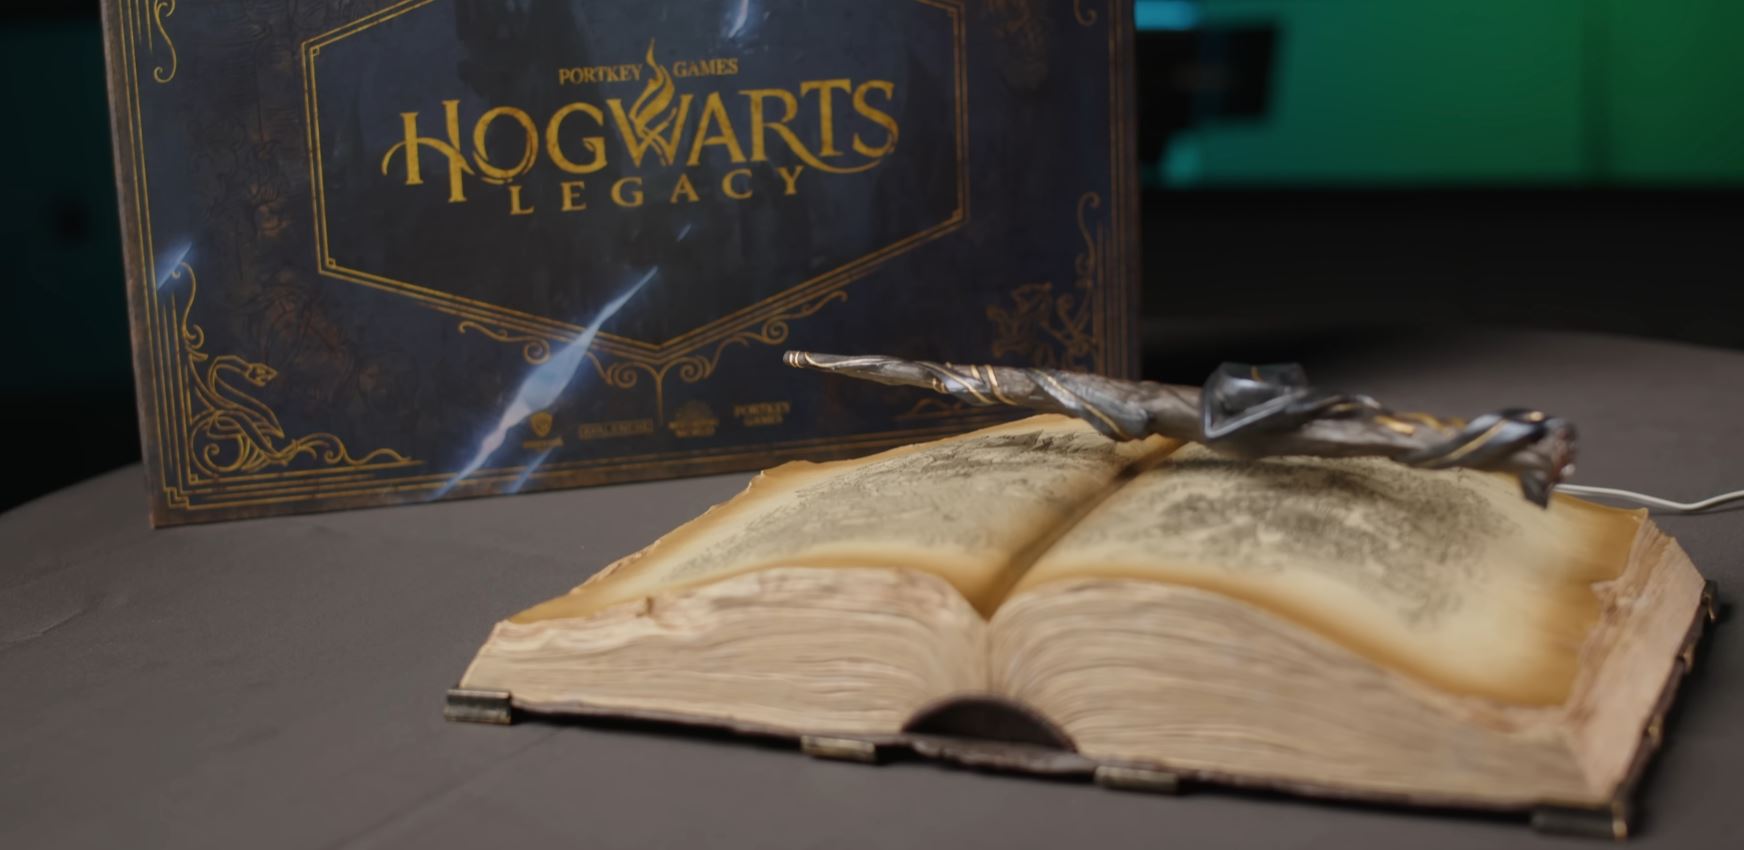 Warner Bros. Hogwarts Legacy, Deluxe Edition, PS4 : : Videogiochi